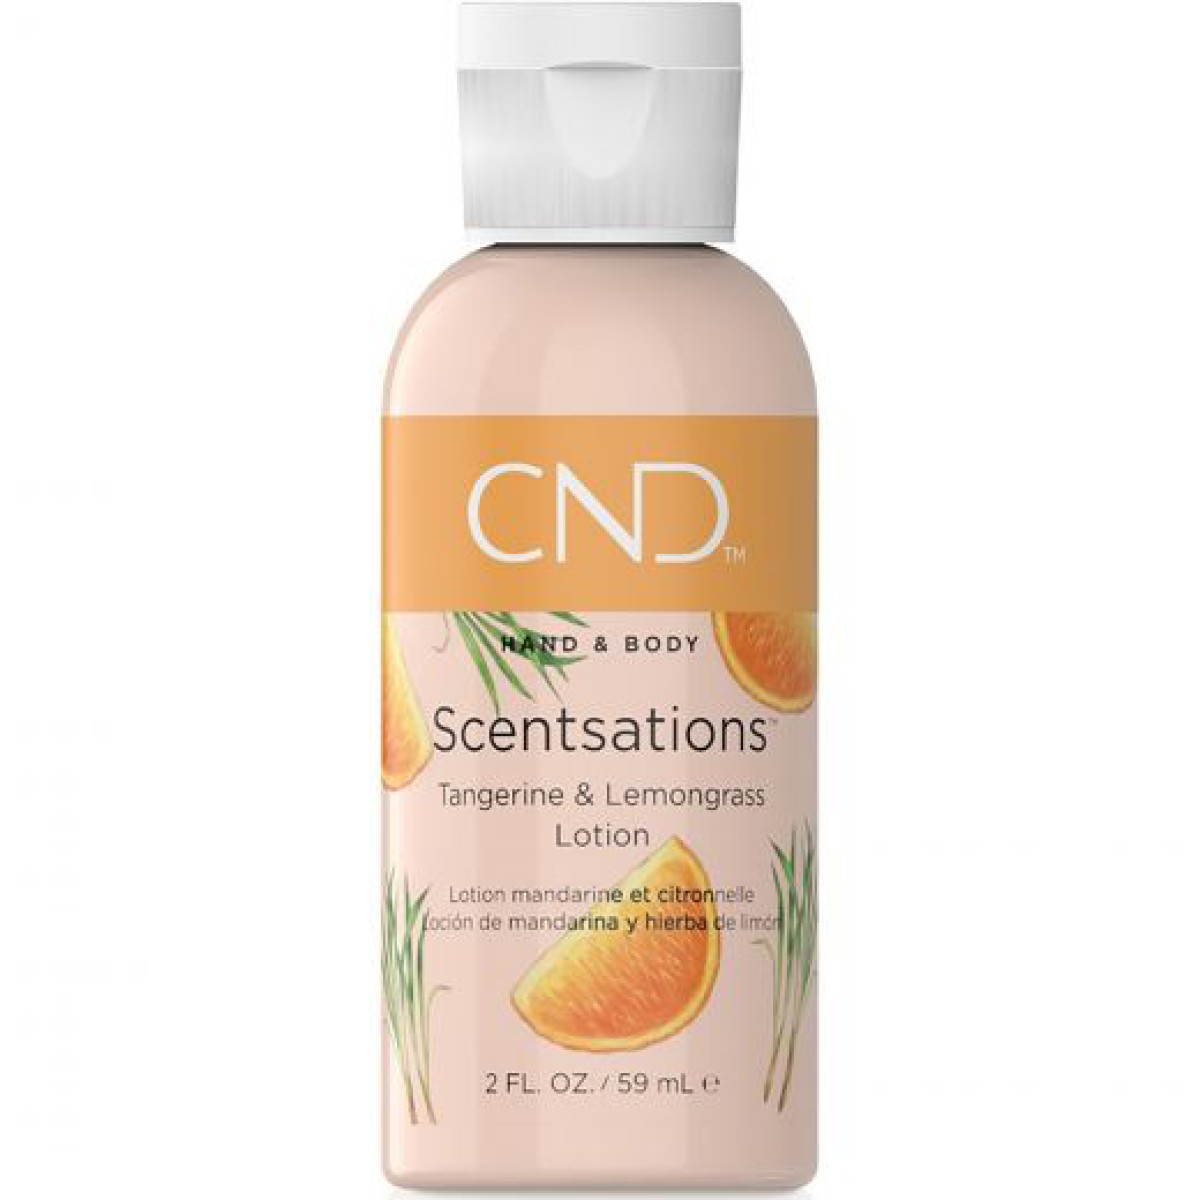 cn14107_cnd-scentsations-tangerine-lemongrass-lotion-59-ml_1